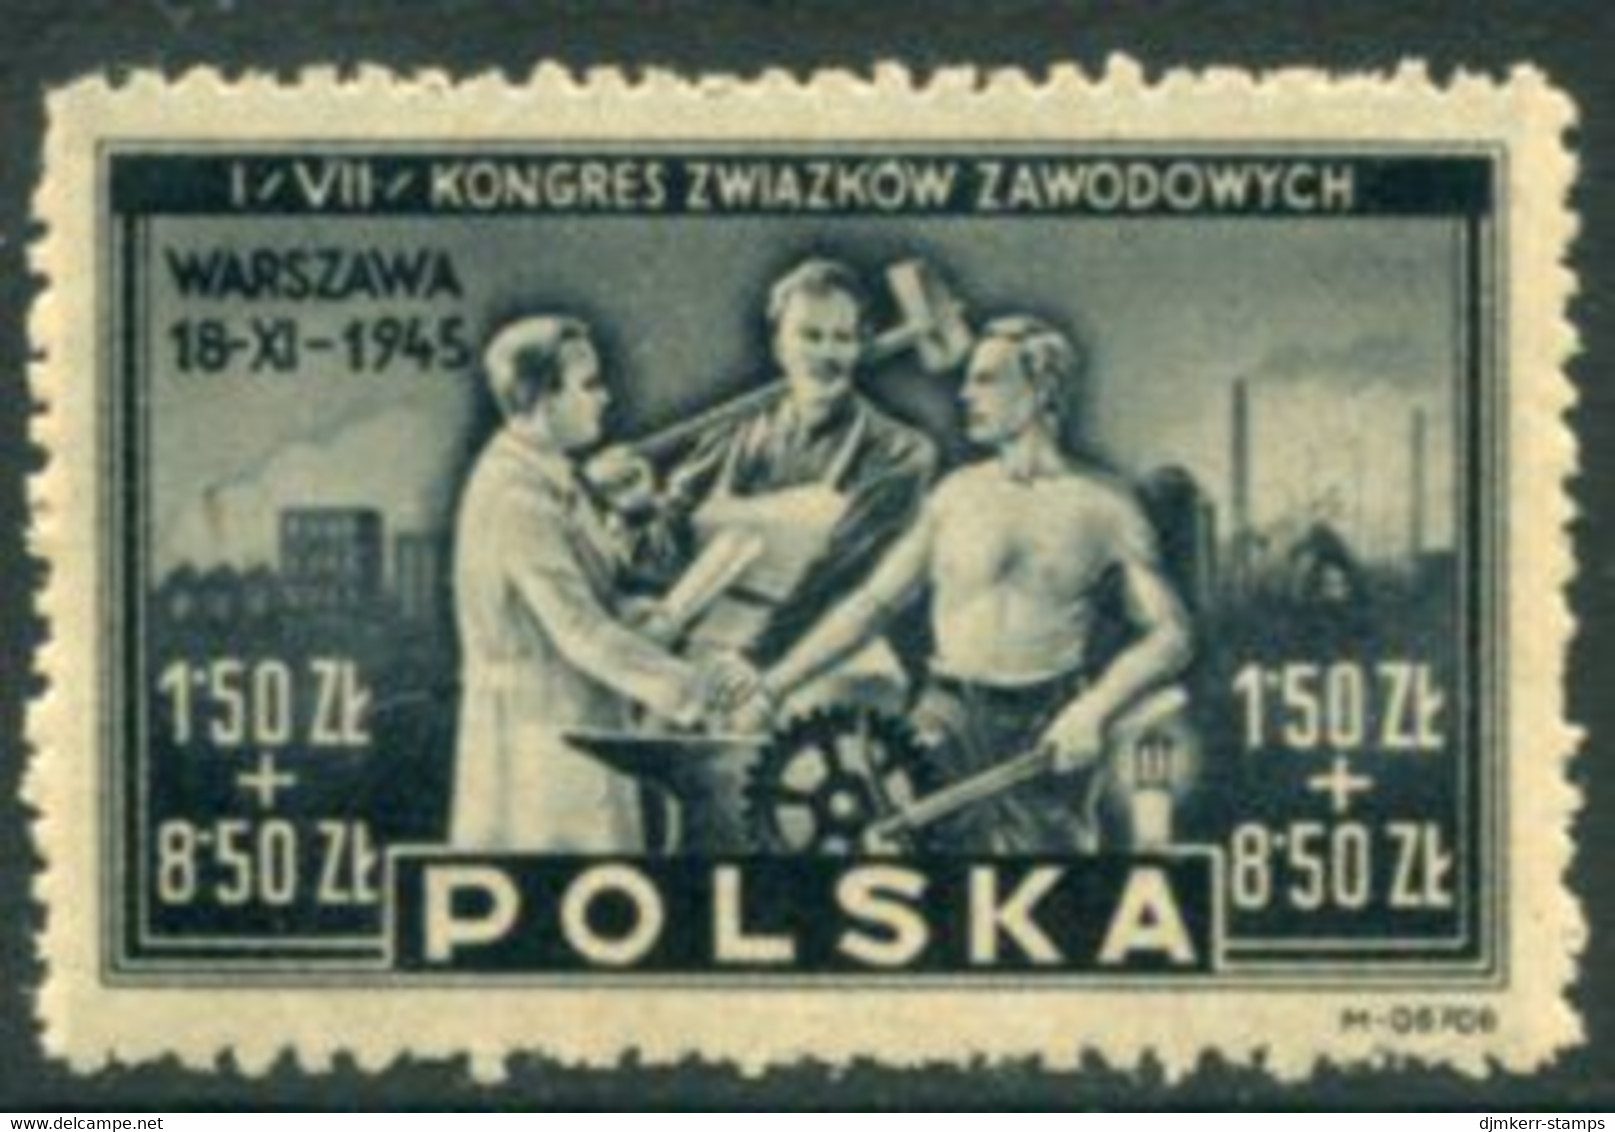 POLAND 1945 Trades Union Congress MNH / **.  Michel 413 - Unused Stamps